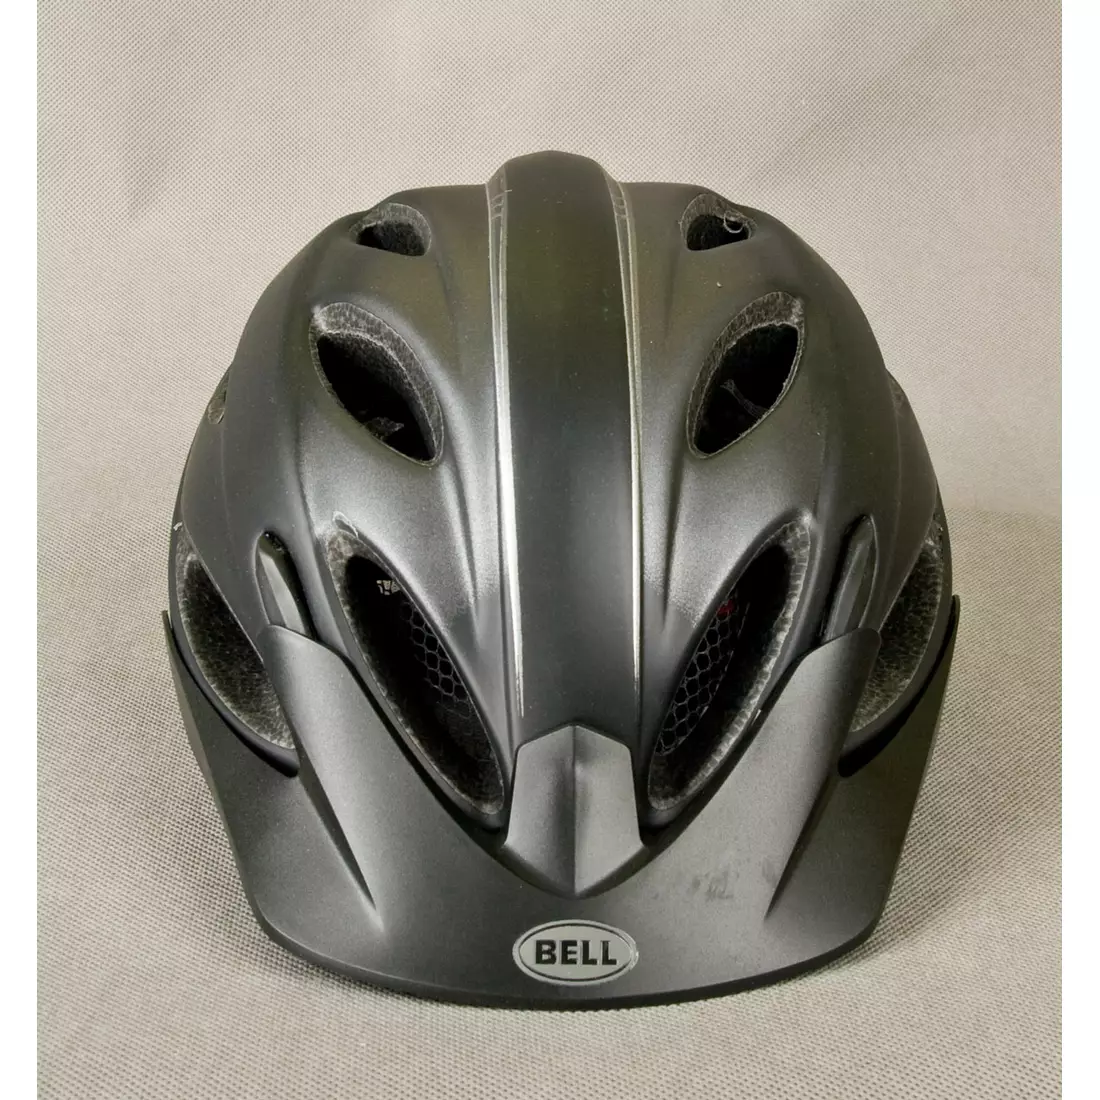 Cyklistická helma BELL PISTON černá matná